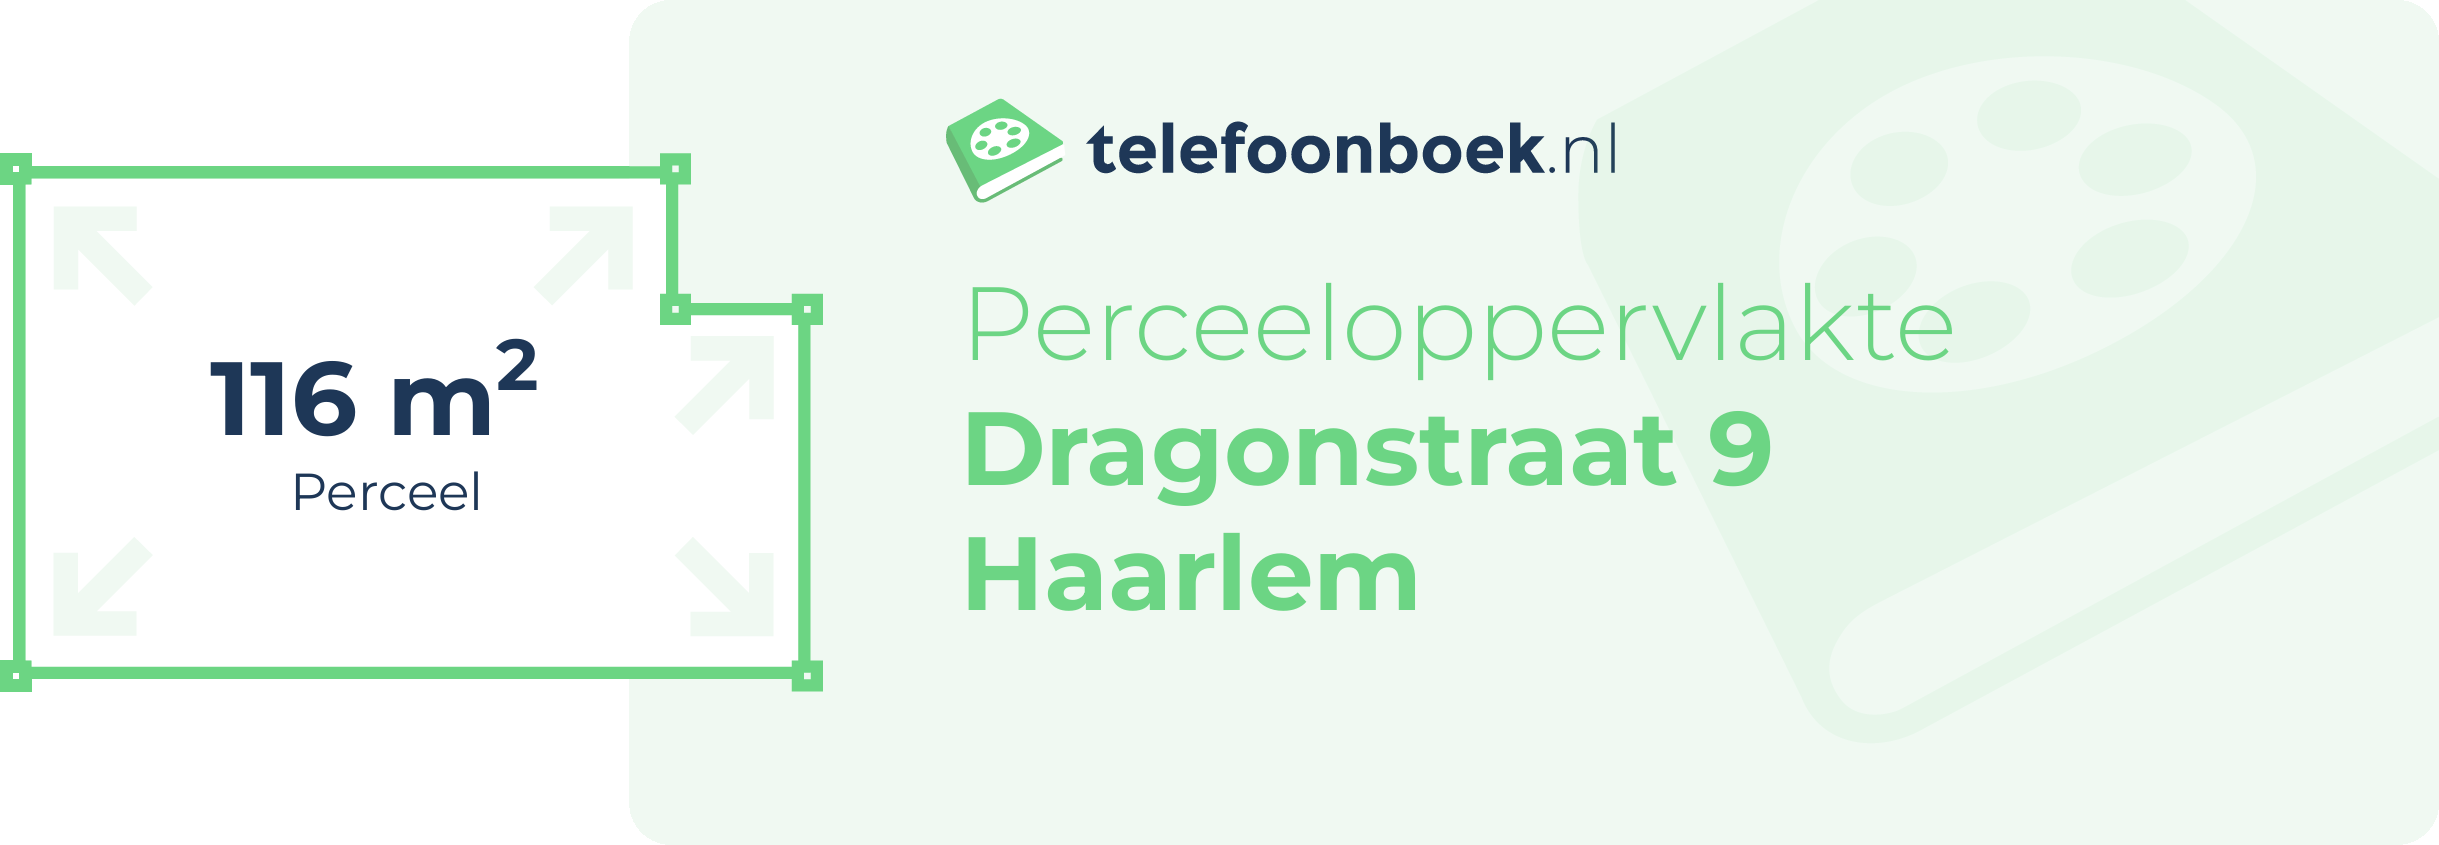 Perceeloppervlakte Dragonstraat 9 Haarlem